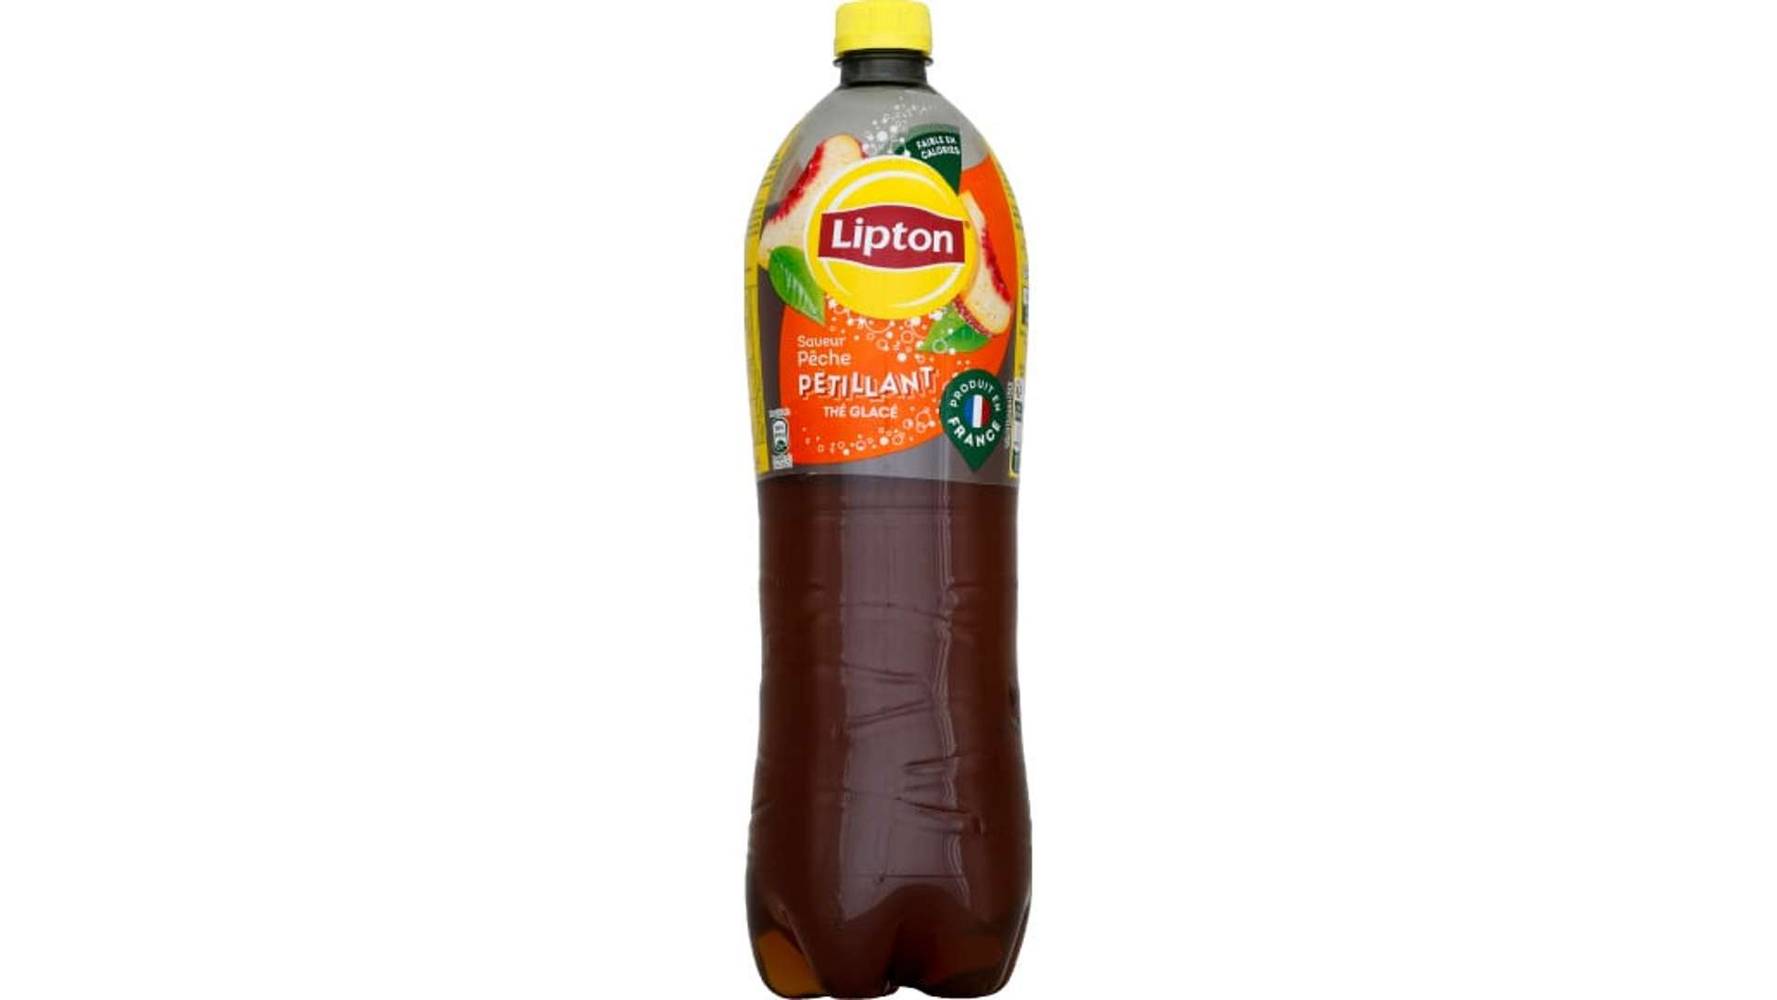 Lipton - Boisson au thé glacé pétillant (1.25 L) (pêche)